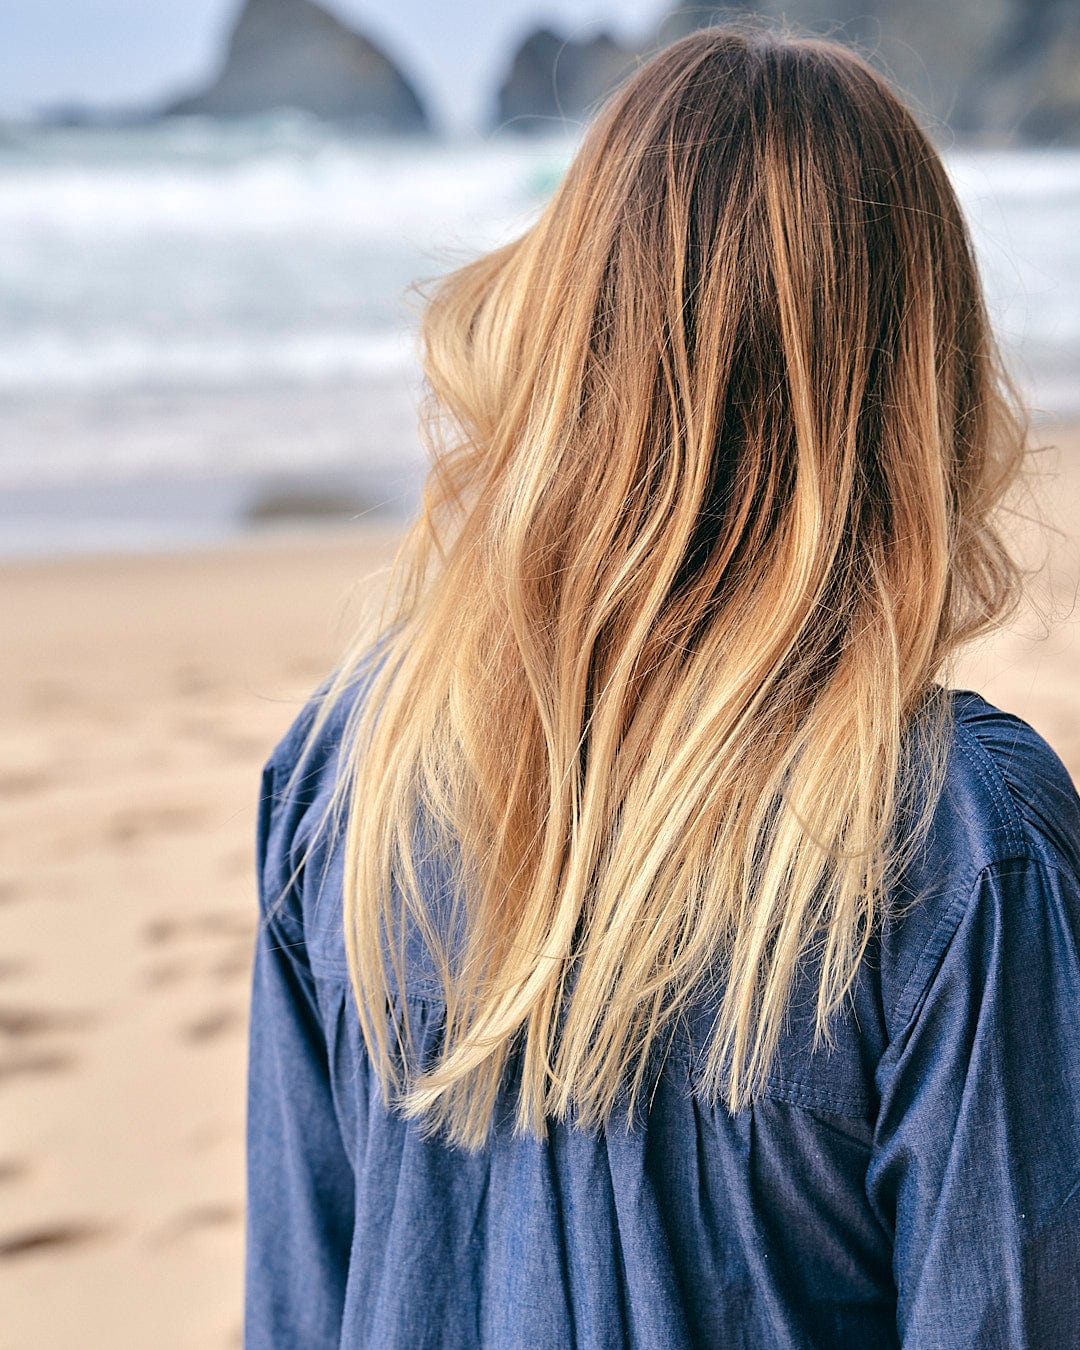 The Saltrock - Manina Womens Beach Shirt - Blue of a woman's hair on the beach.